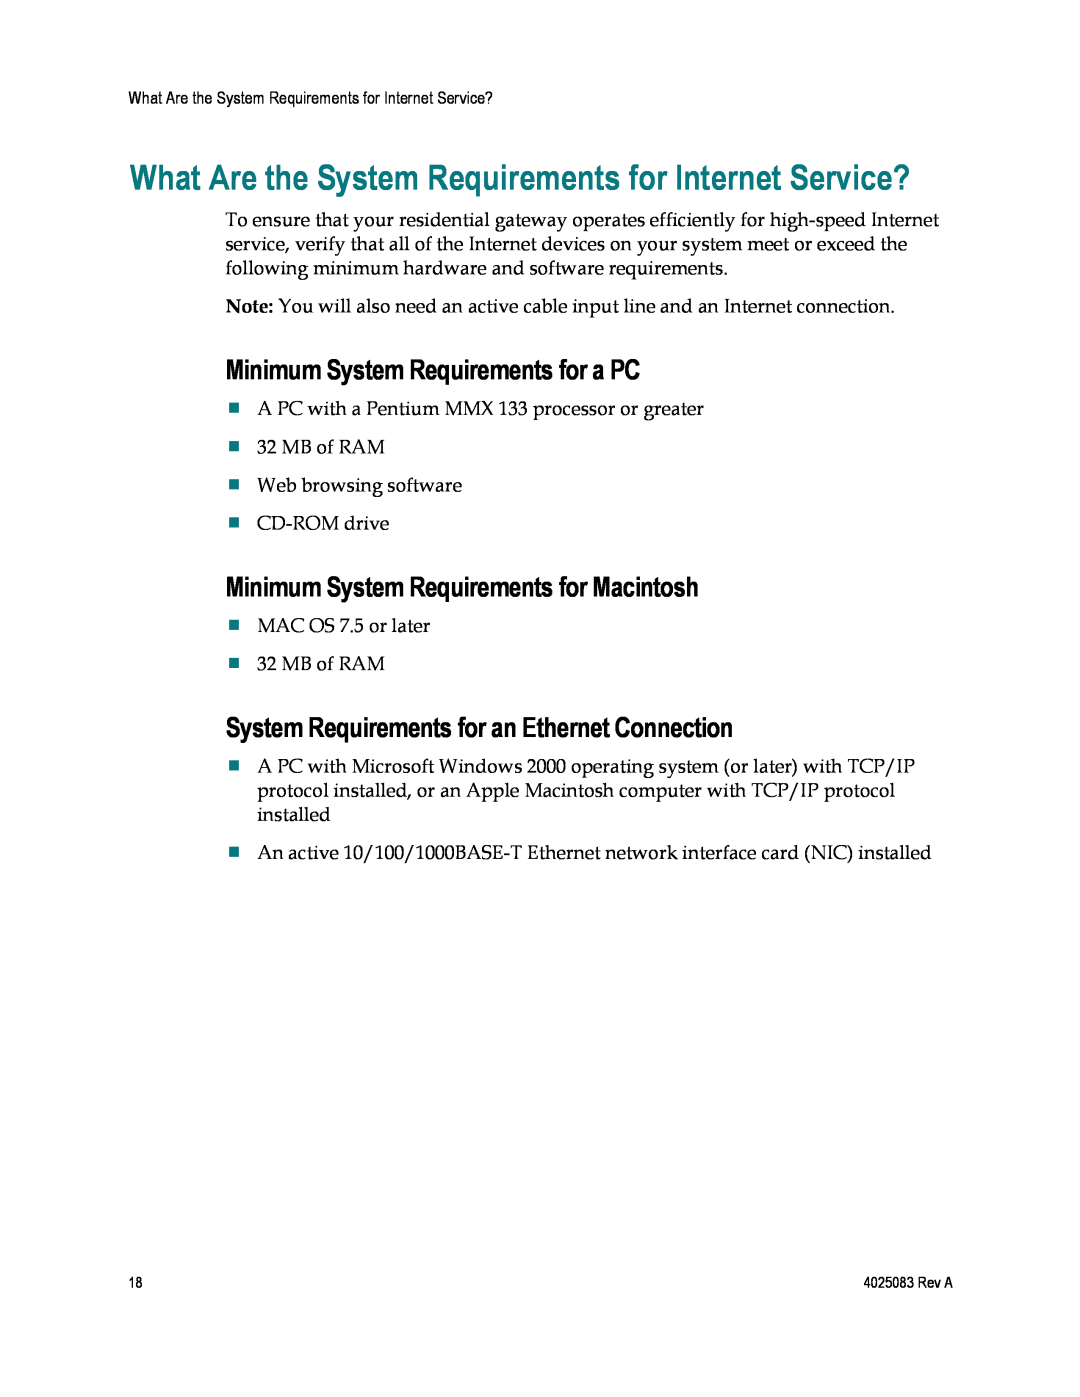 Cisco Systems EPC3827, DPC3827, 4039760 Minimum System Requirements for a PC, Minimum System Requirements for Macintosh 